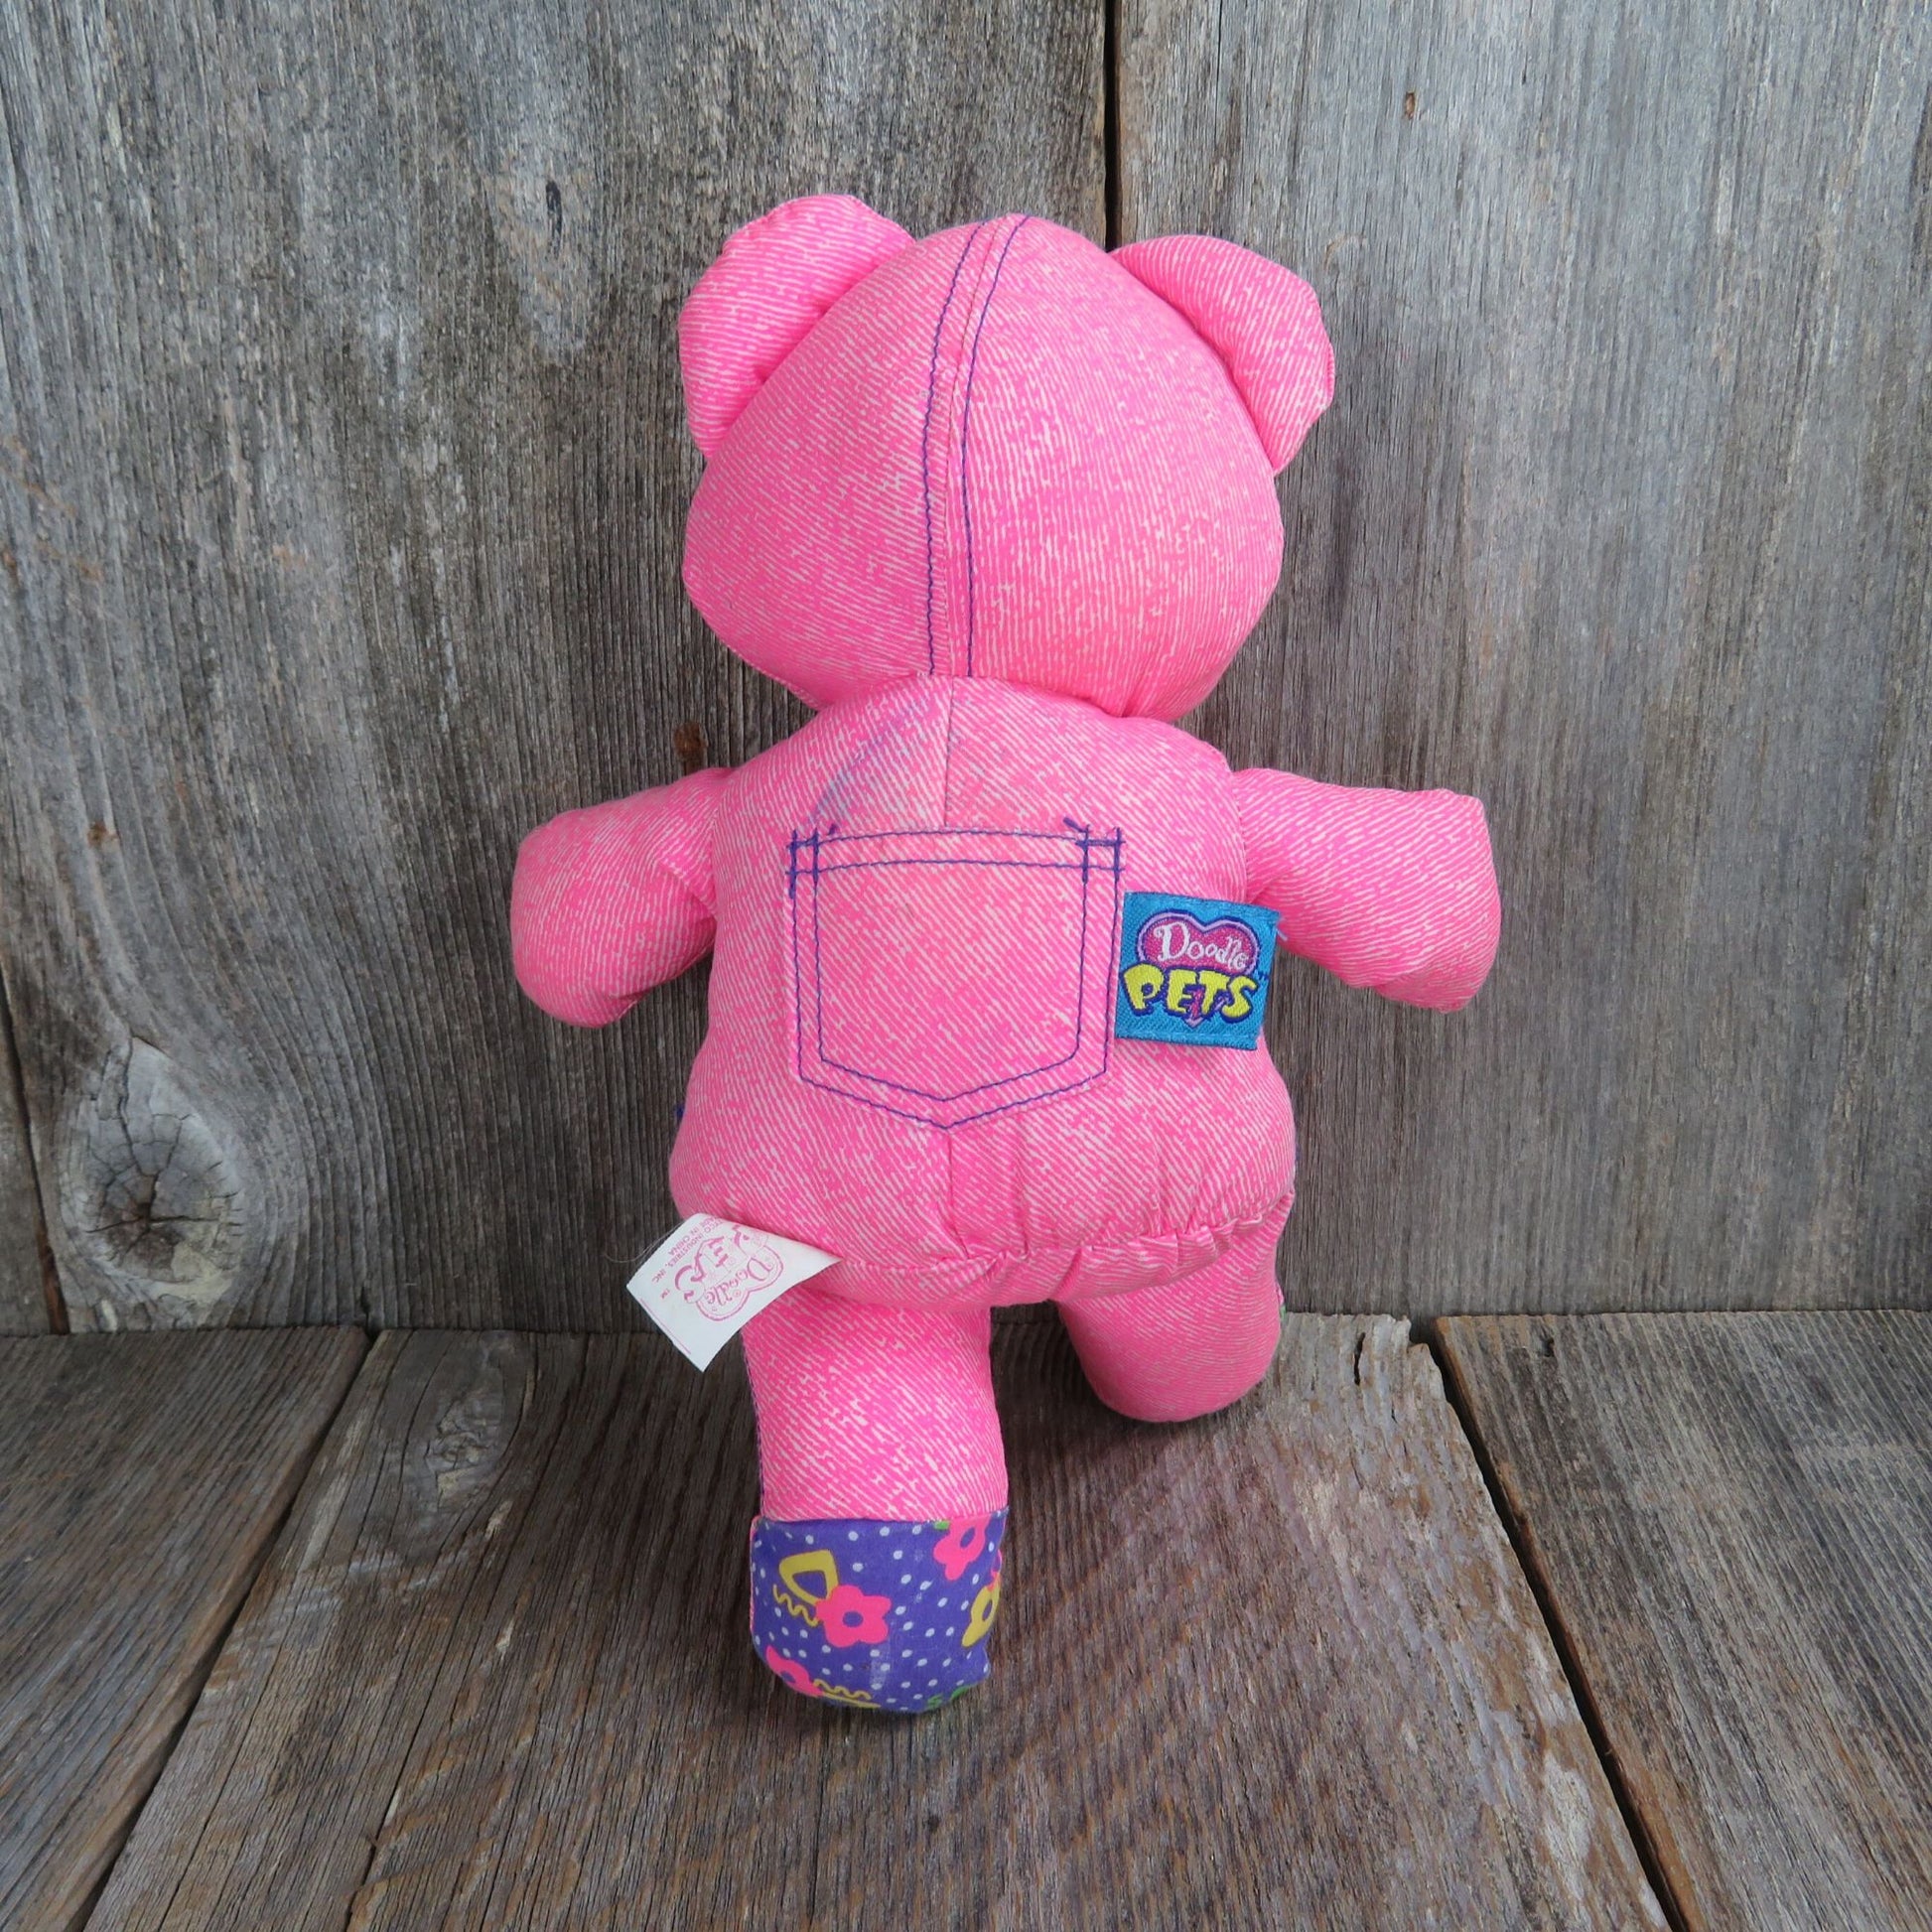 Doodle Bear Pink Purple Plush Stuffed Animal Soft Toy 17” Tyco 1995 Vintage